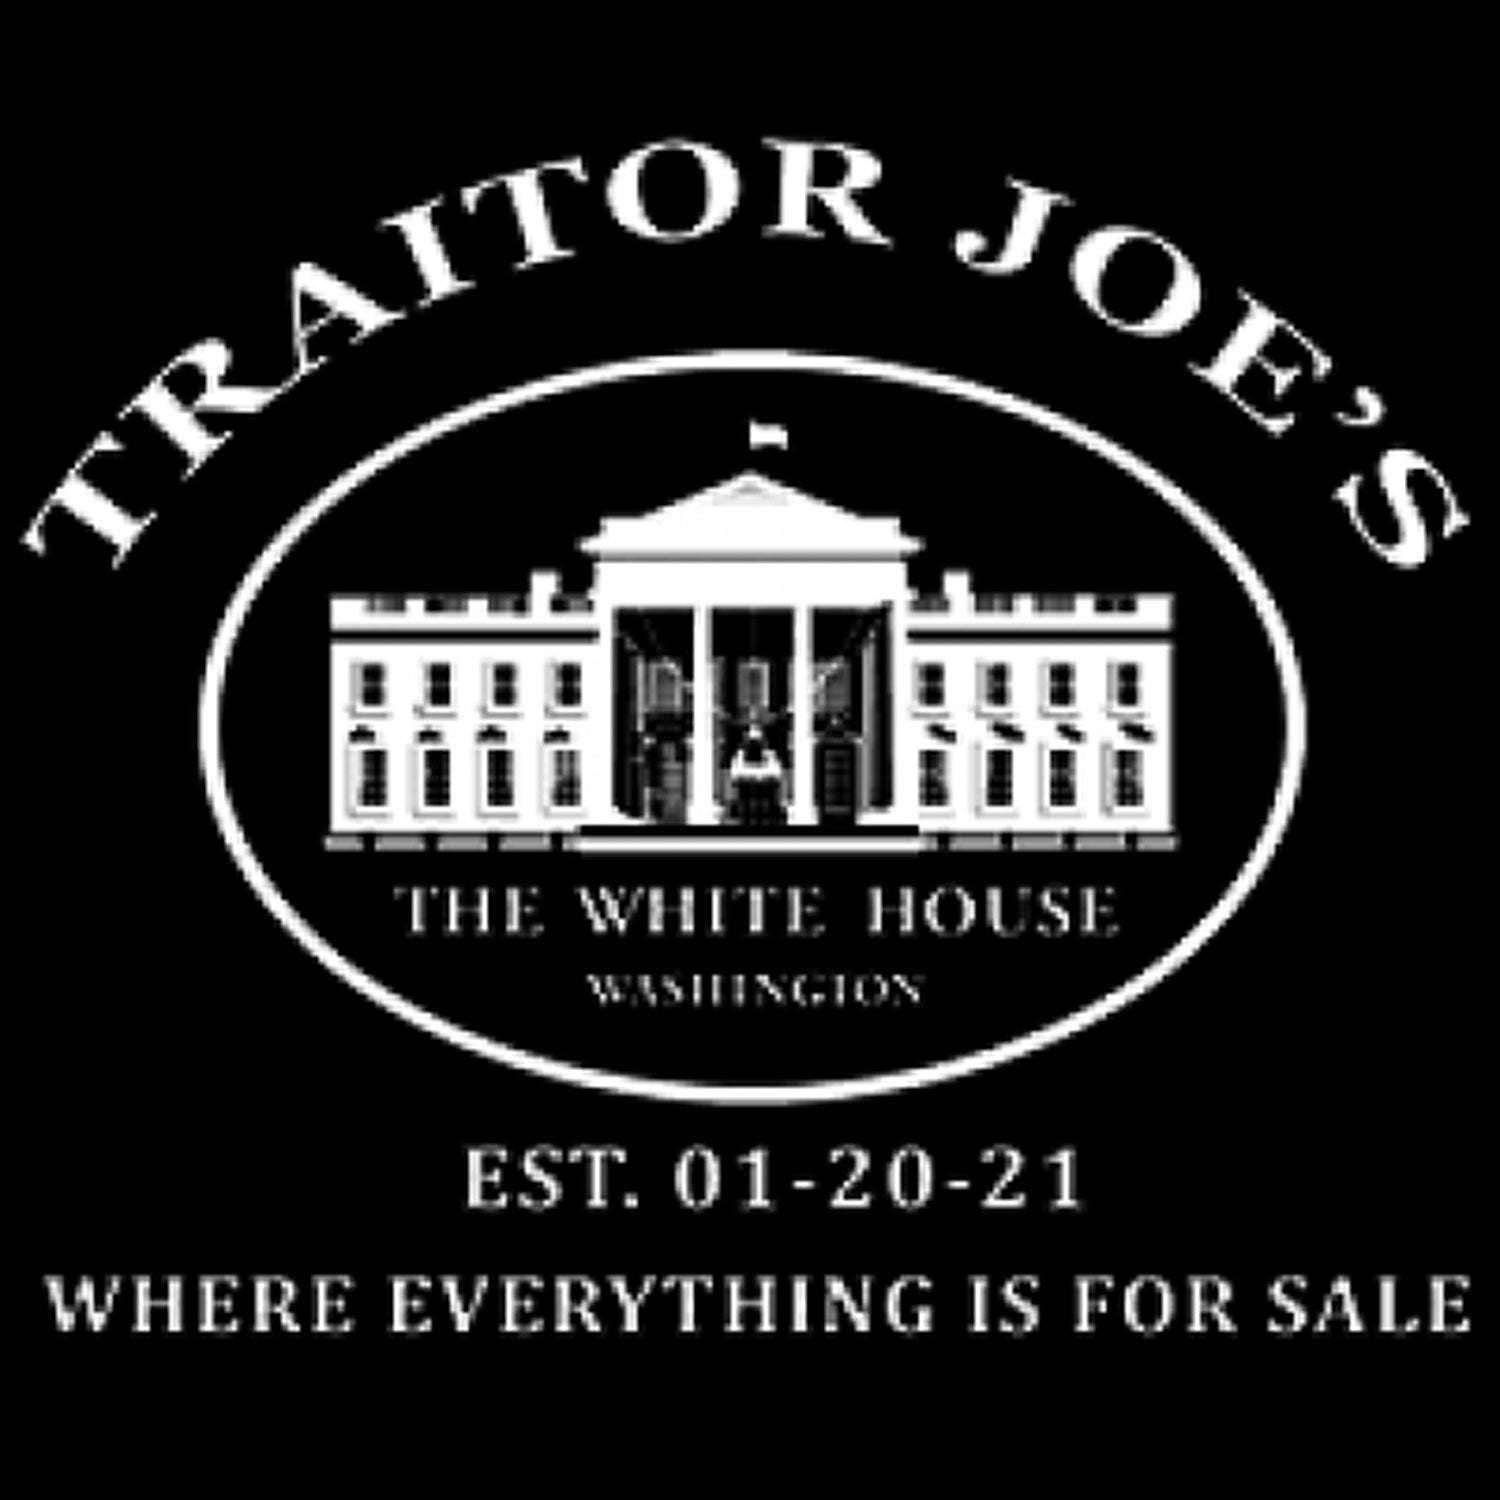 Traitor Joe's Printed T-Shirt-Black